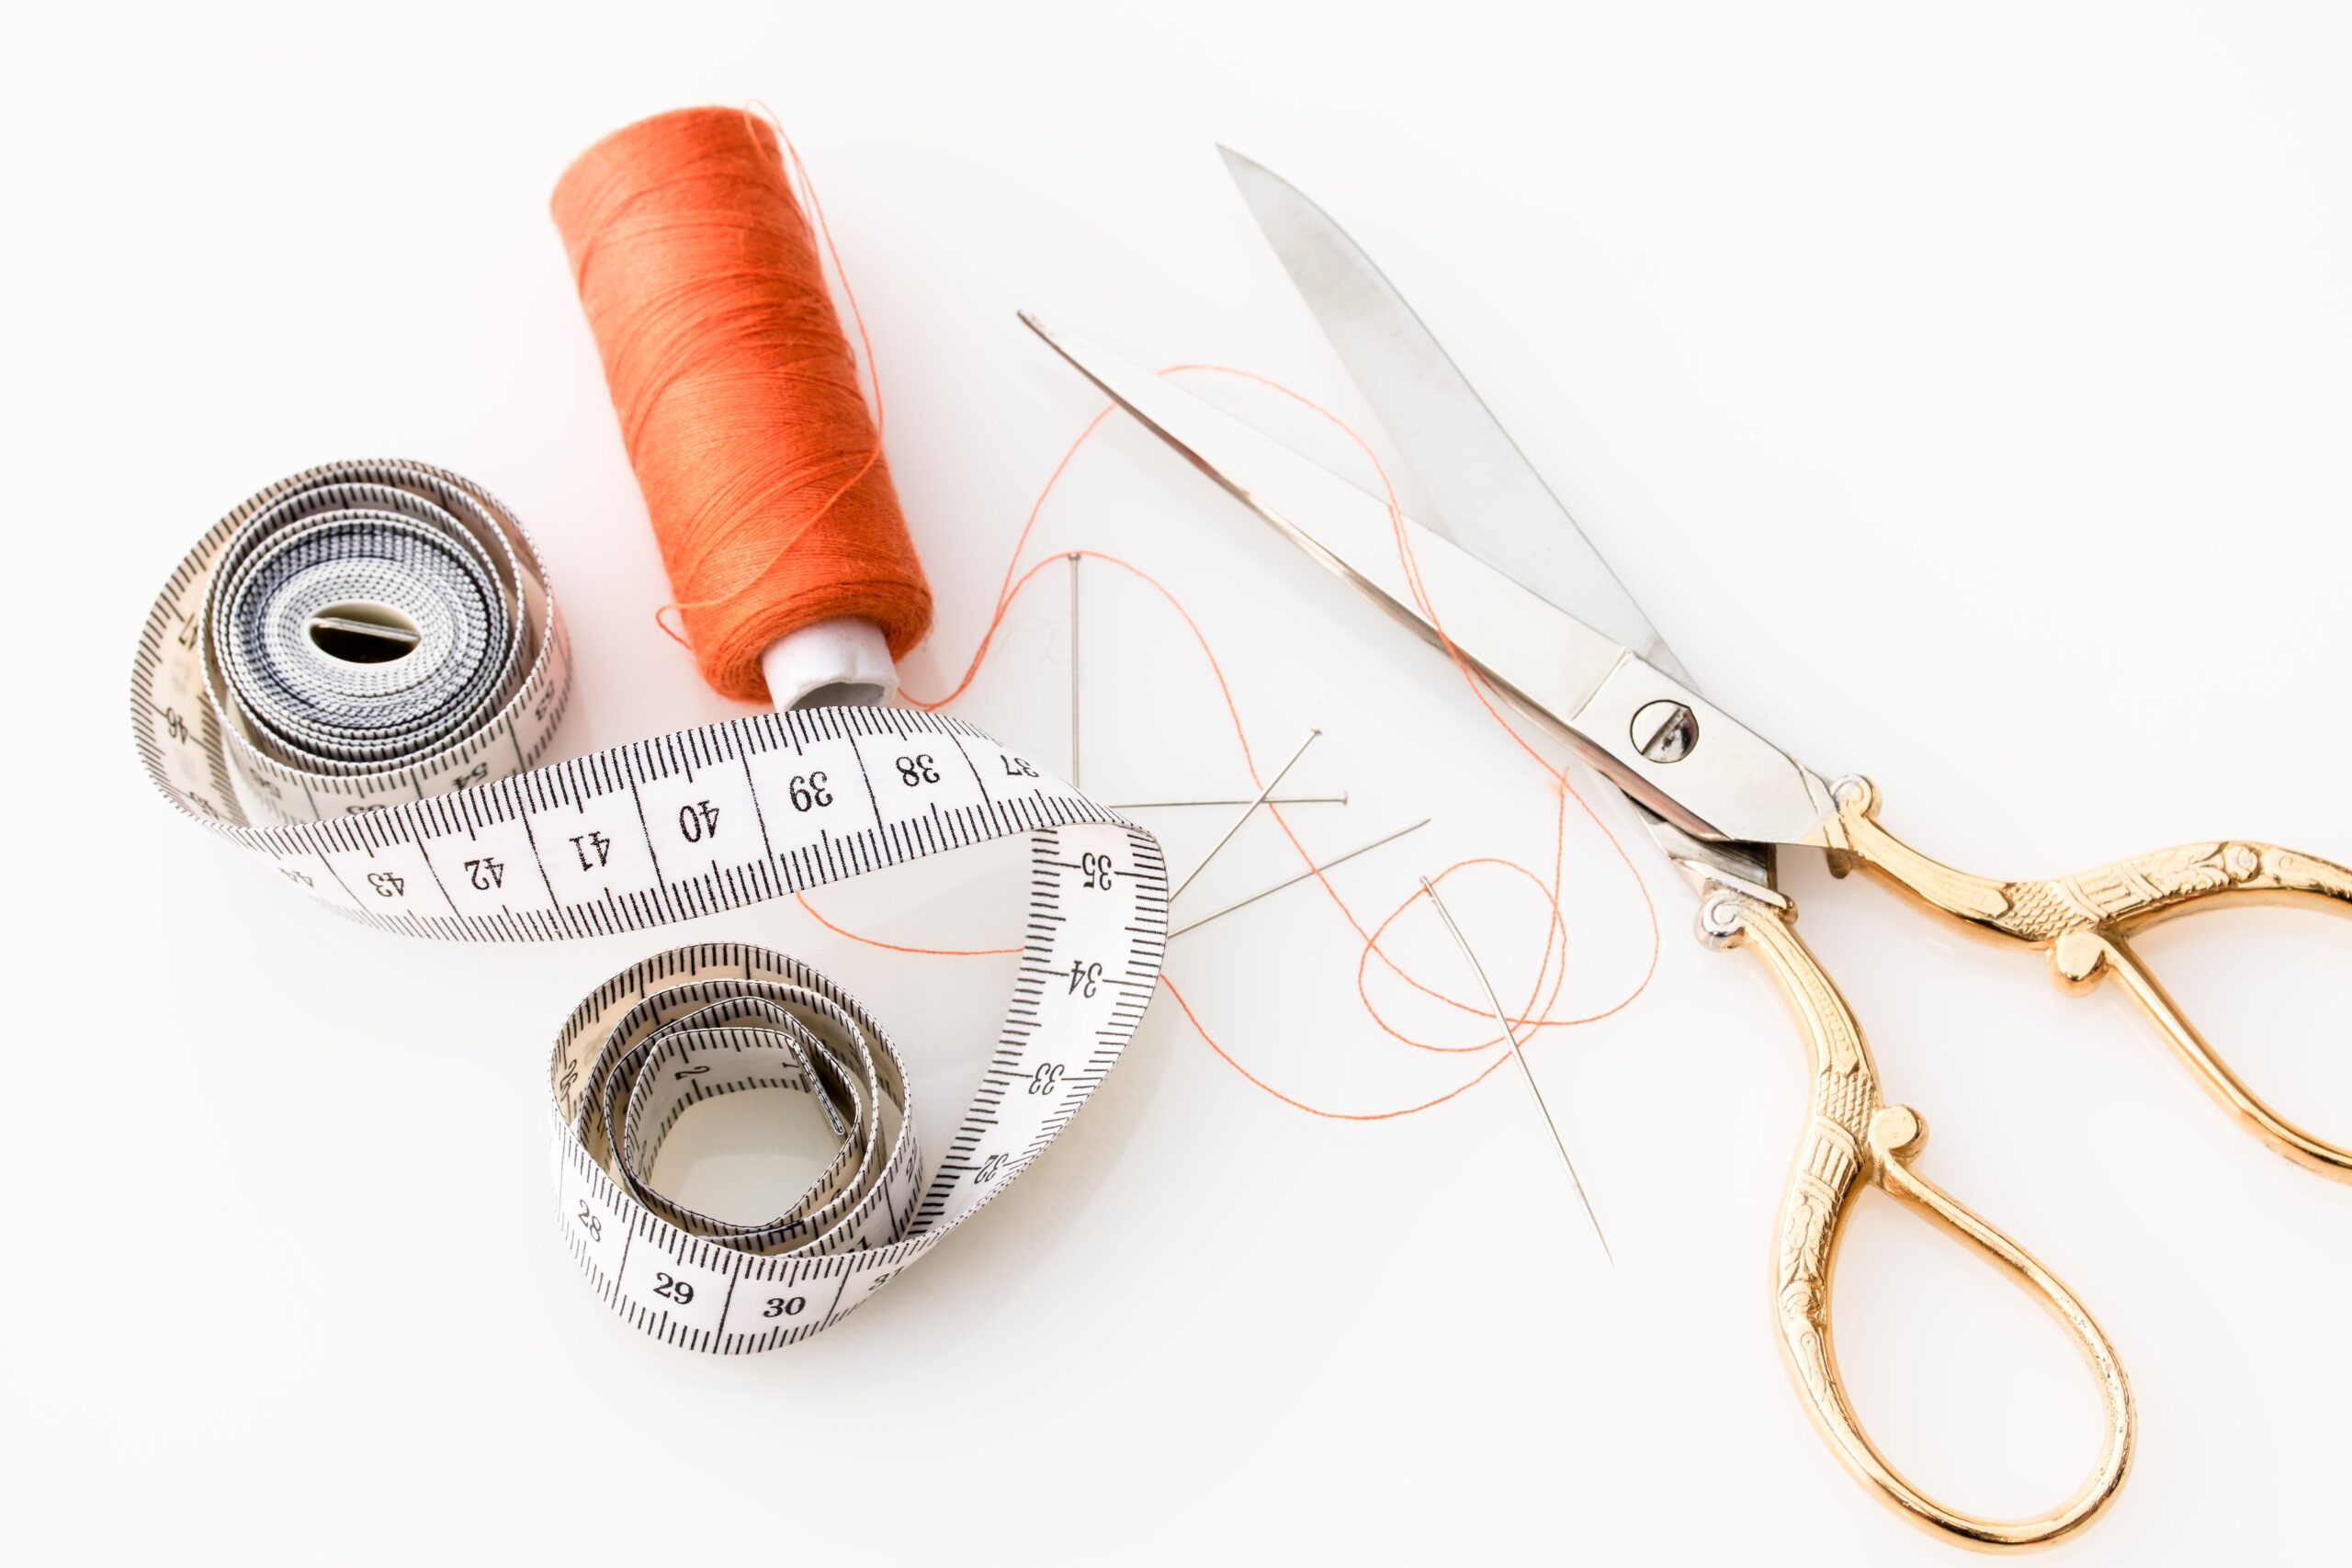 measuring tape, thread, and scissors